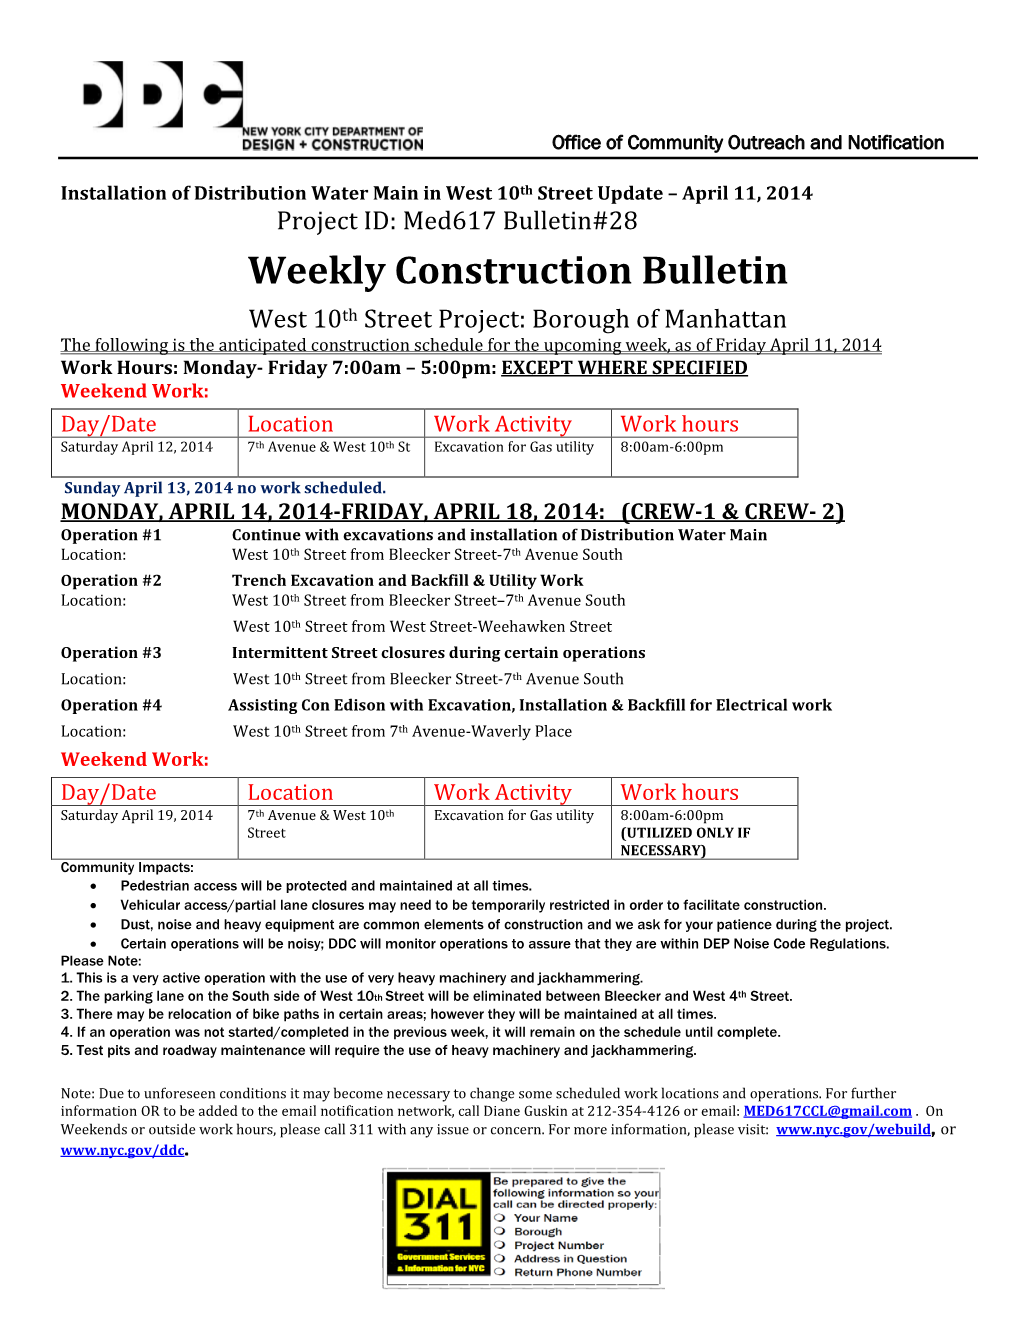 Weekly Construction Bulletin